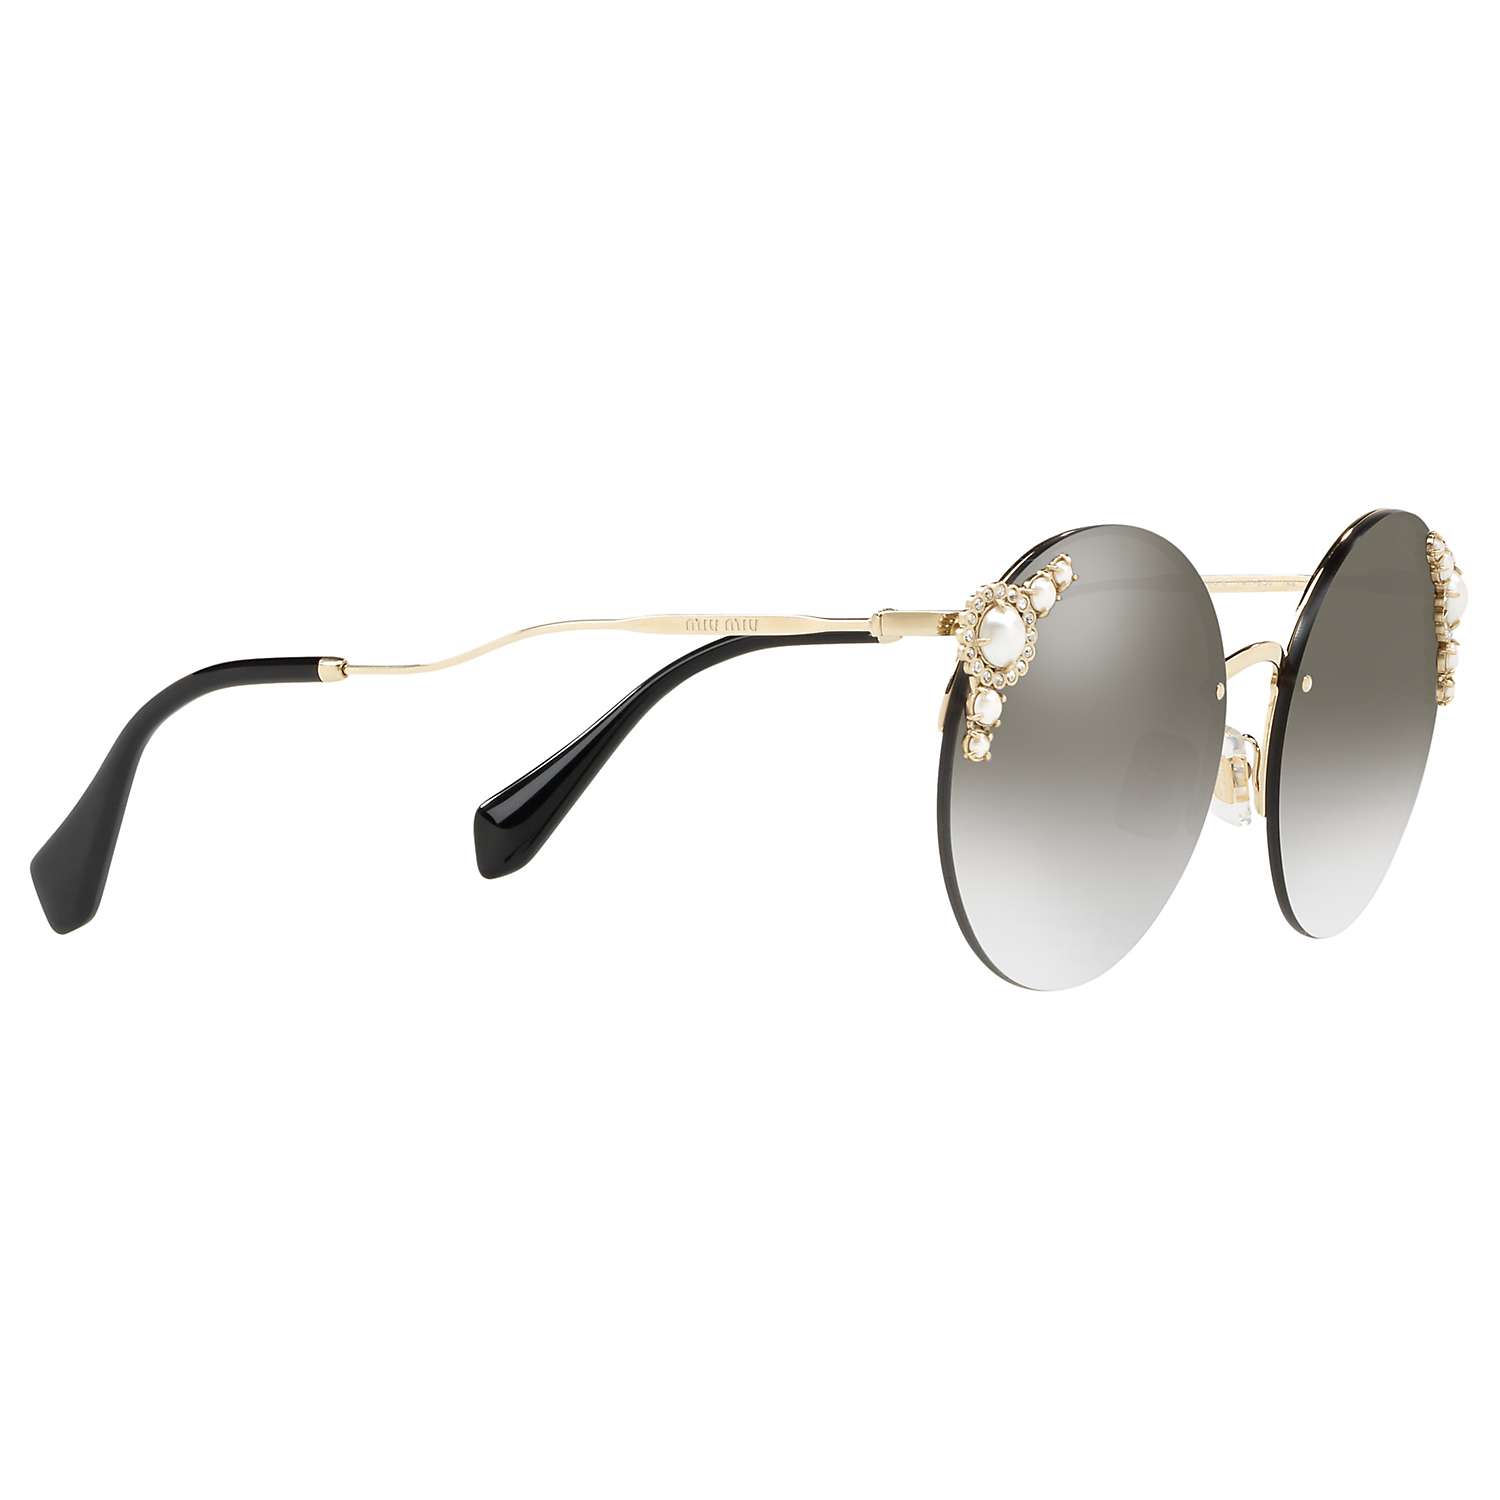 Buy Miu Miu MU 52TS Women's Embellished Round Sunglasses, Gold/Mirror Grey Online at johnlewis.com